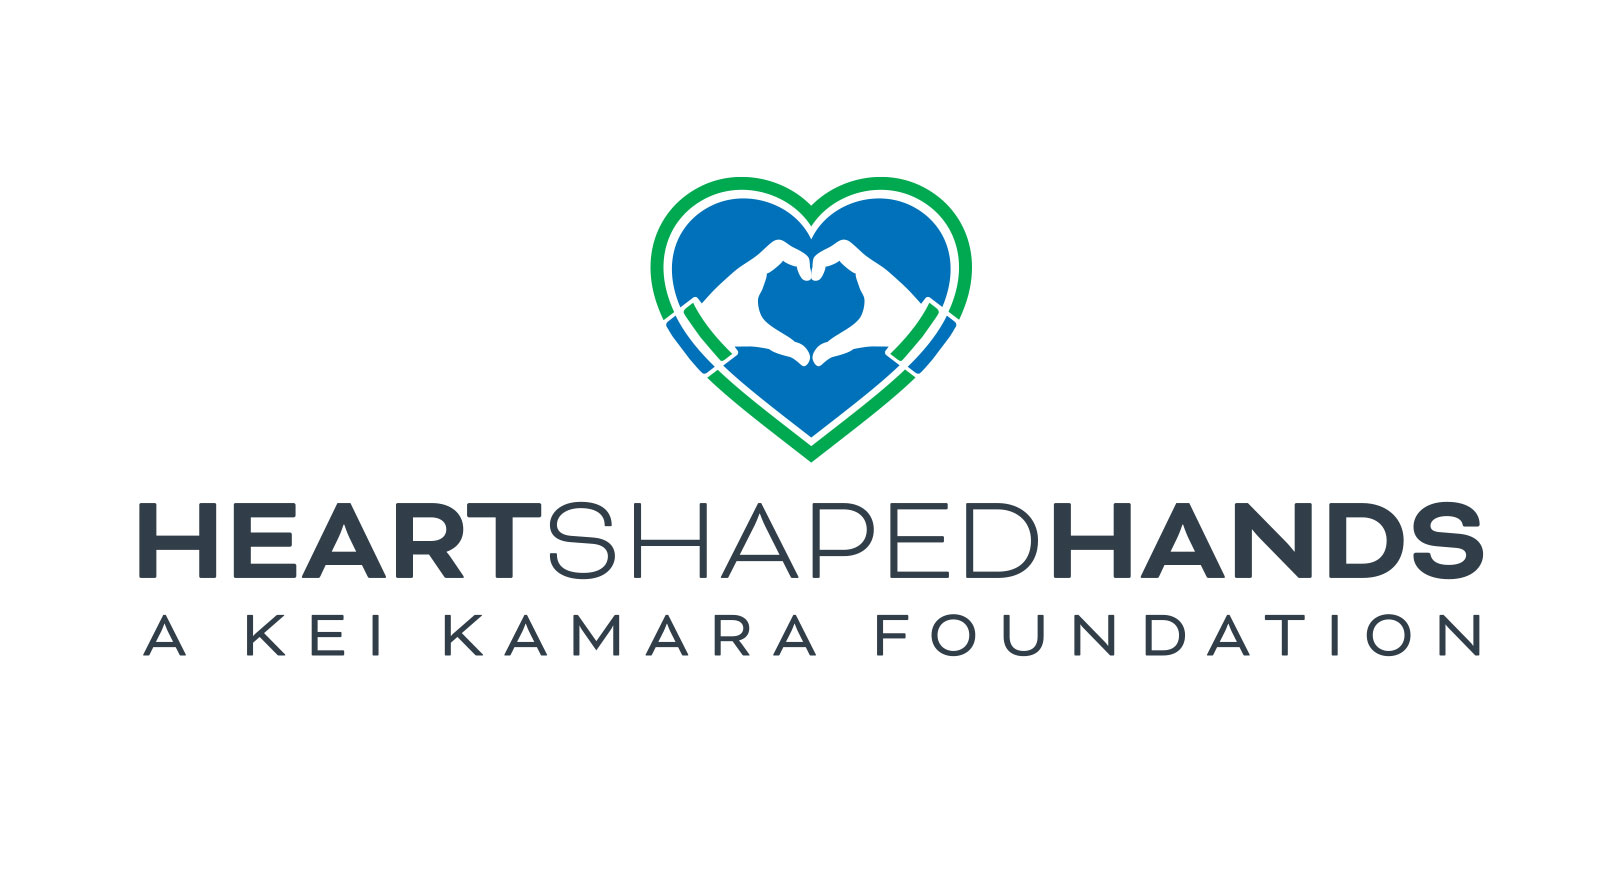 About  HeartShapedHands - A Kei Kamara Foundation